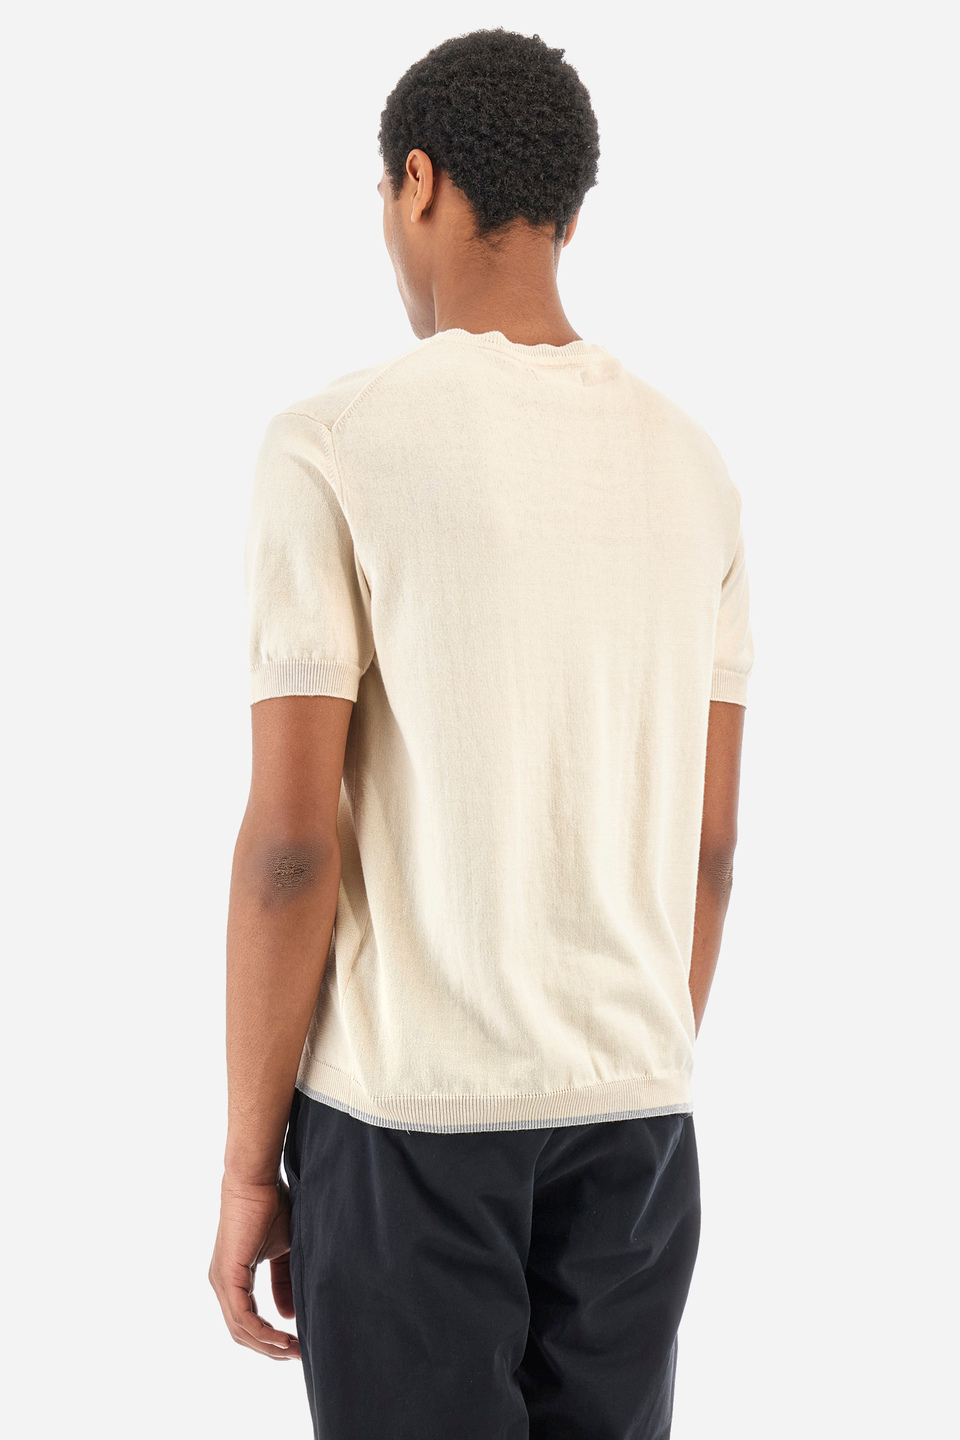 Sweater de hombre de corte recto - Yasenin | La Martina - Official Online Shop